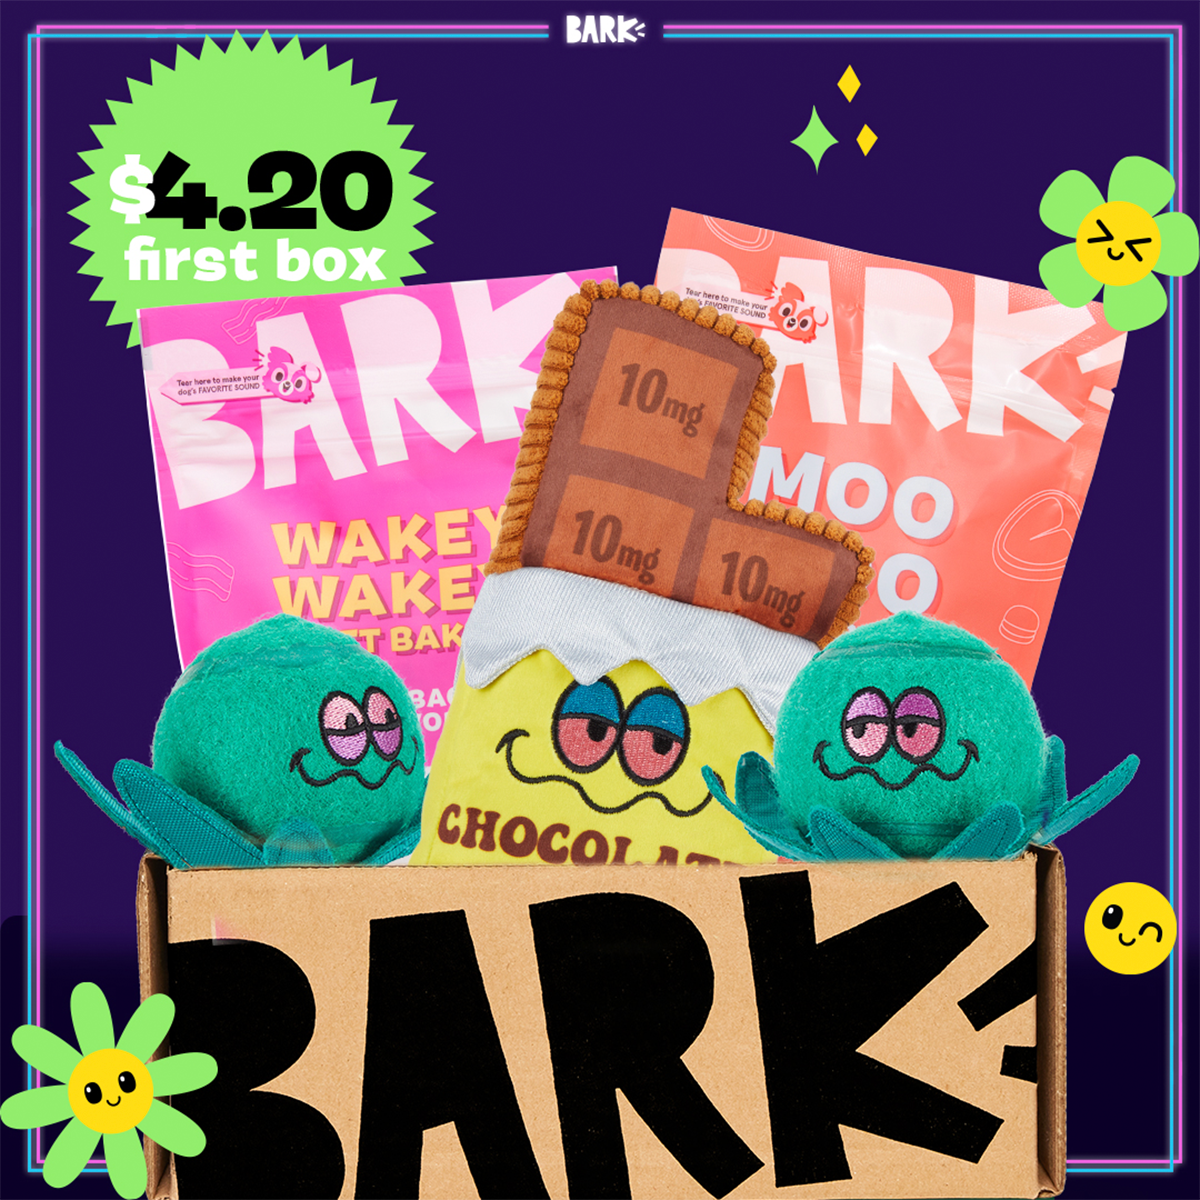 BarkBox 12 Month Subscription - $4.20 First Box